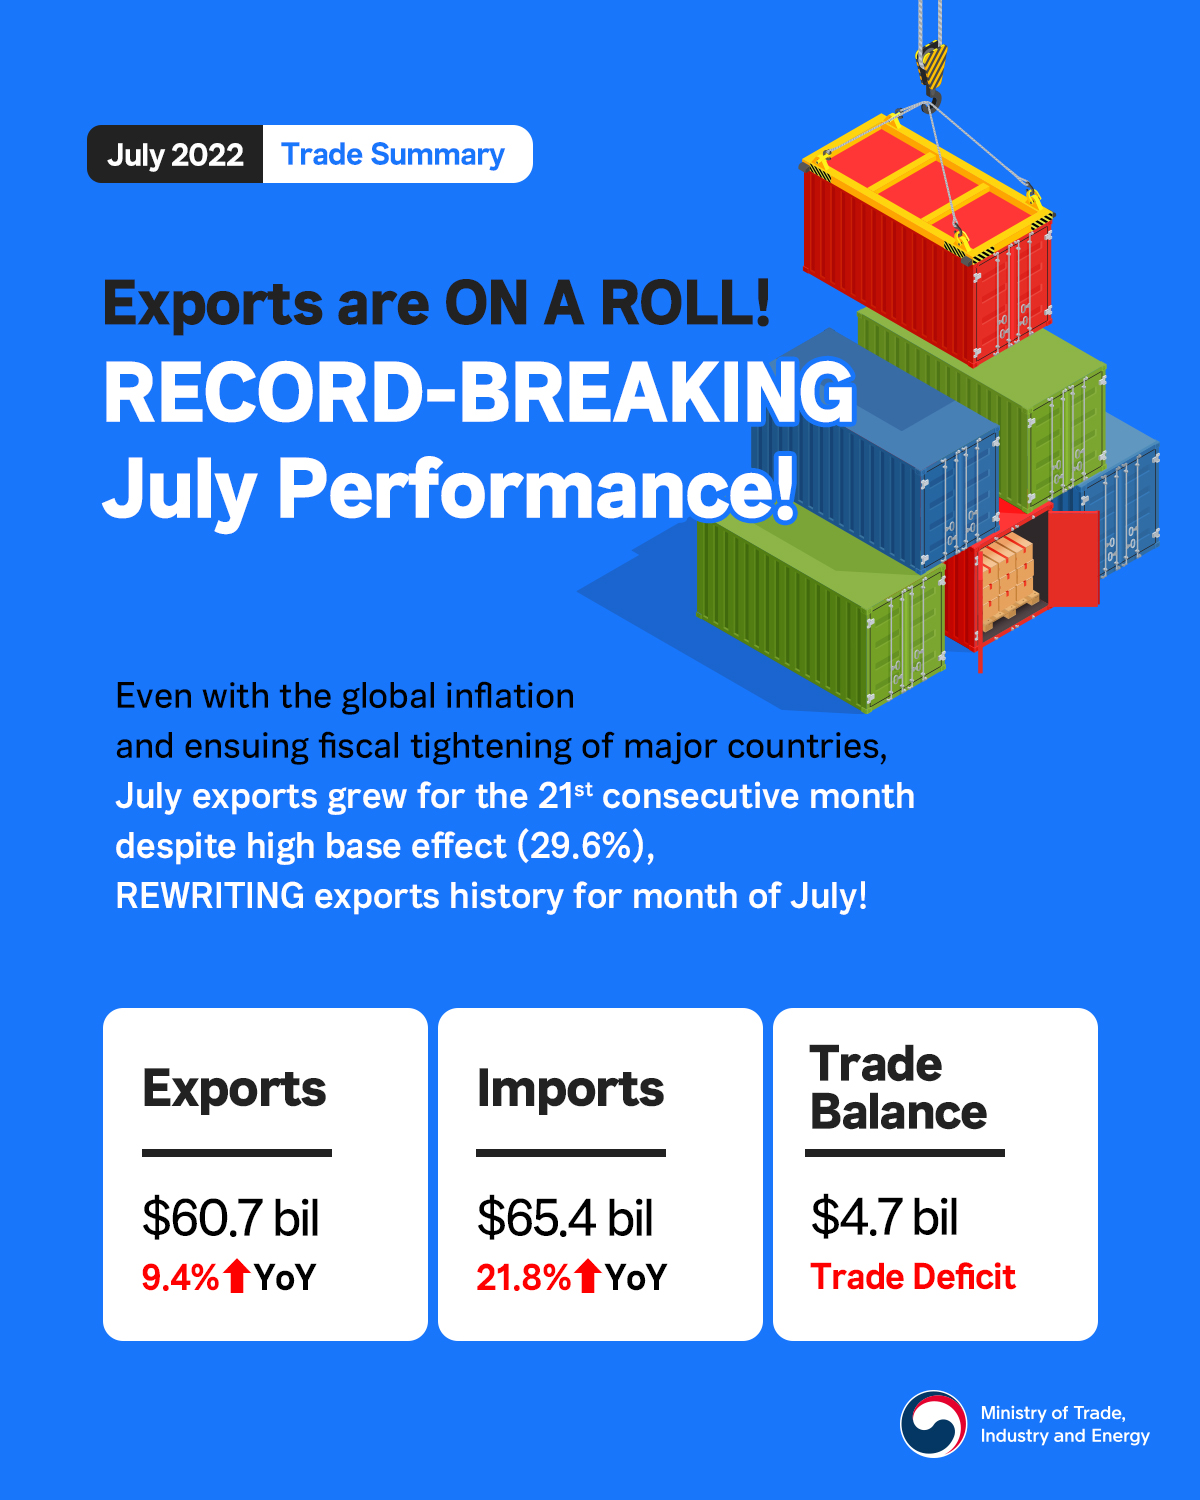 Korea's exports record historic July performance!